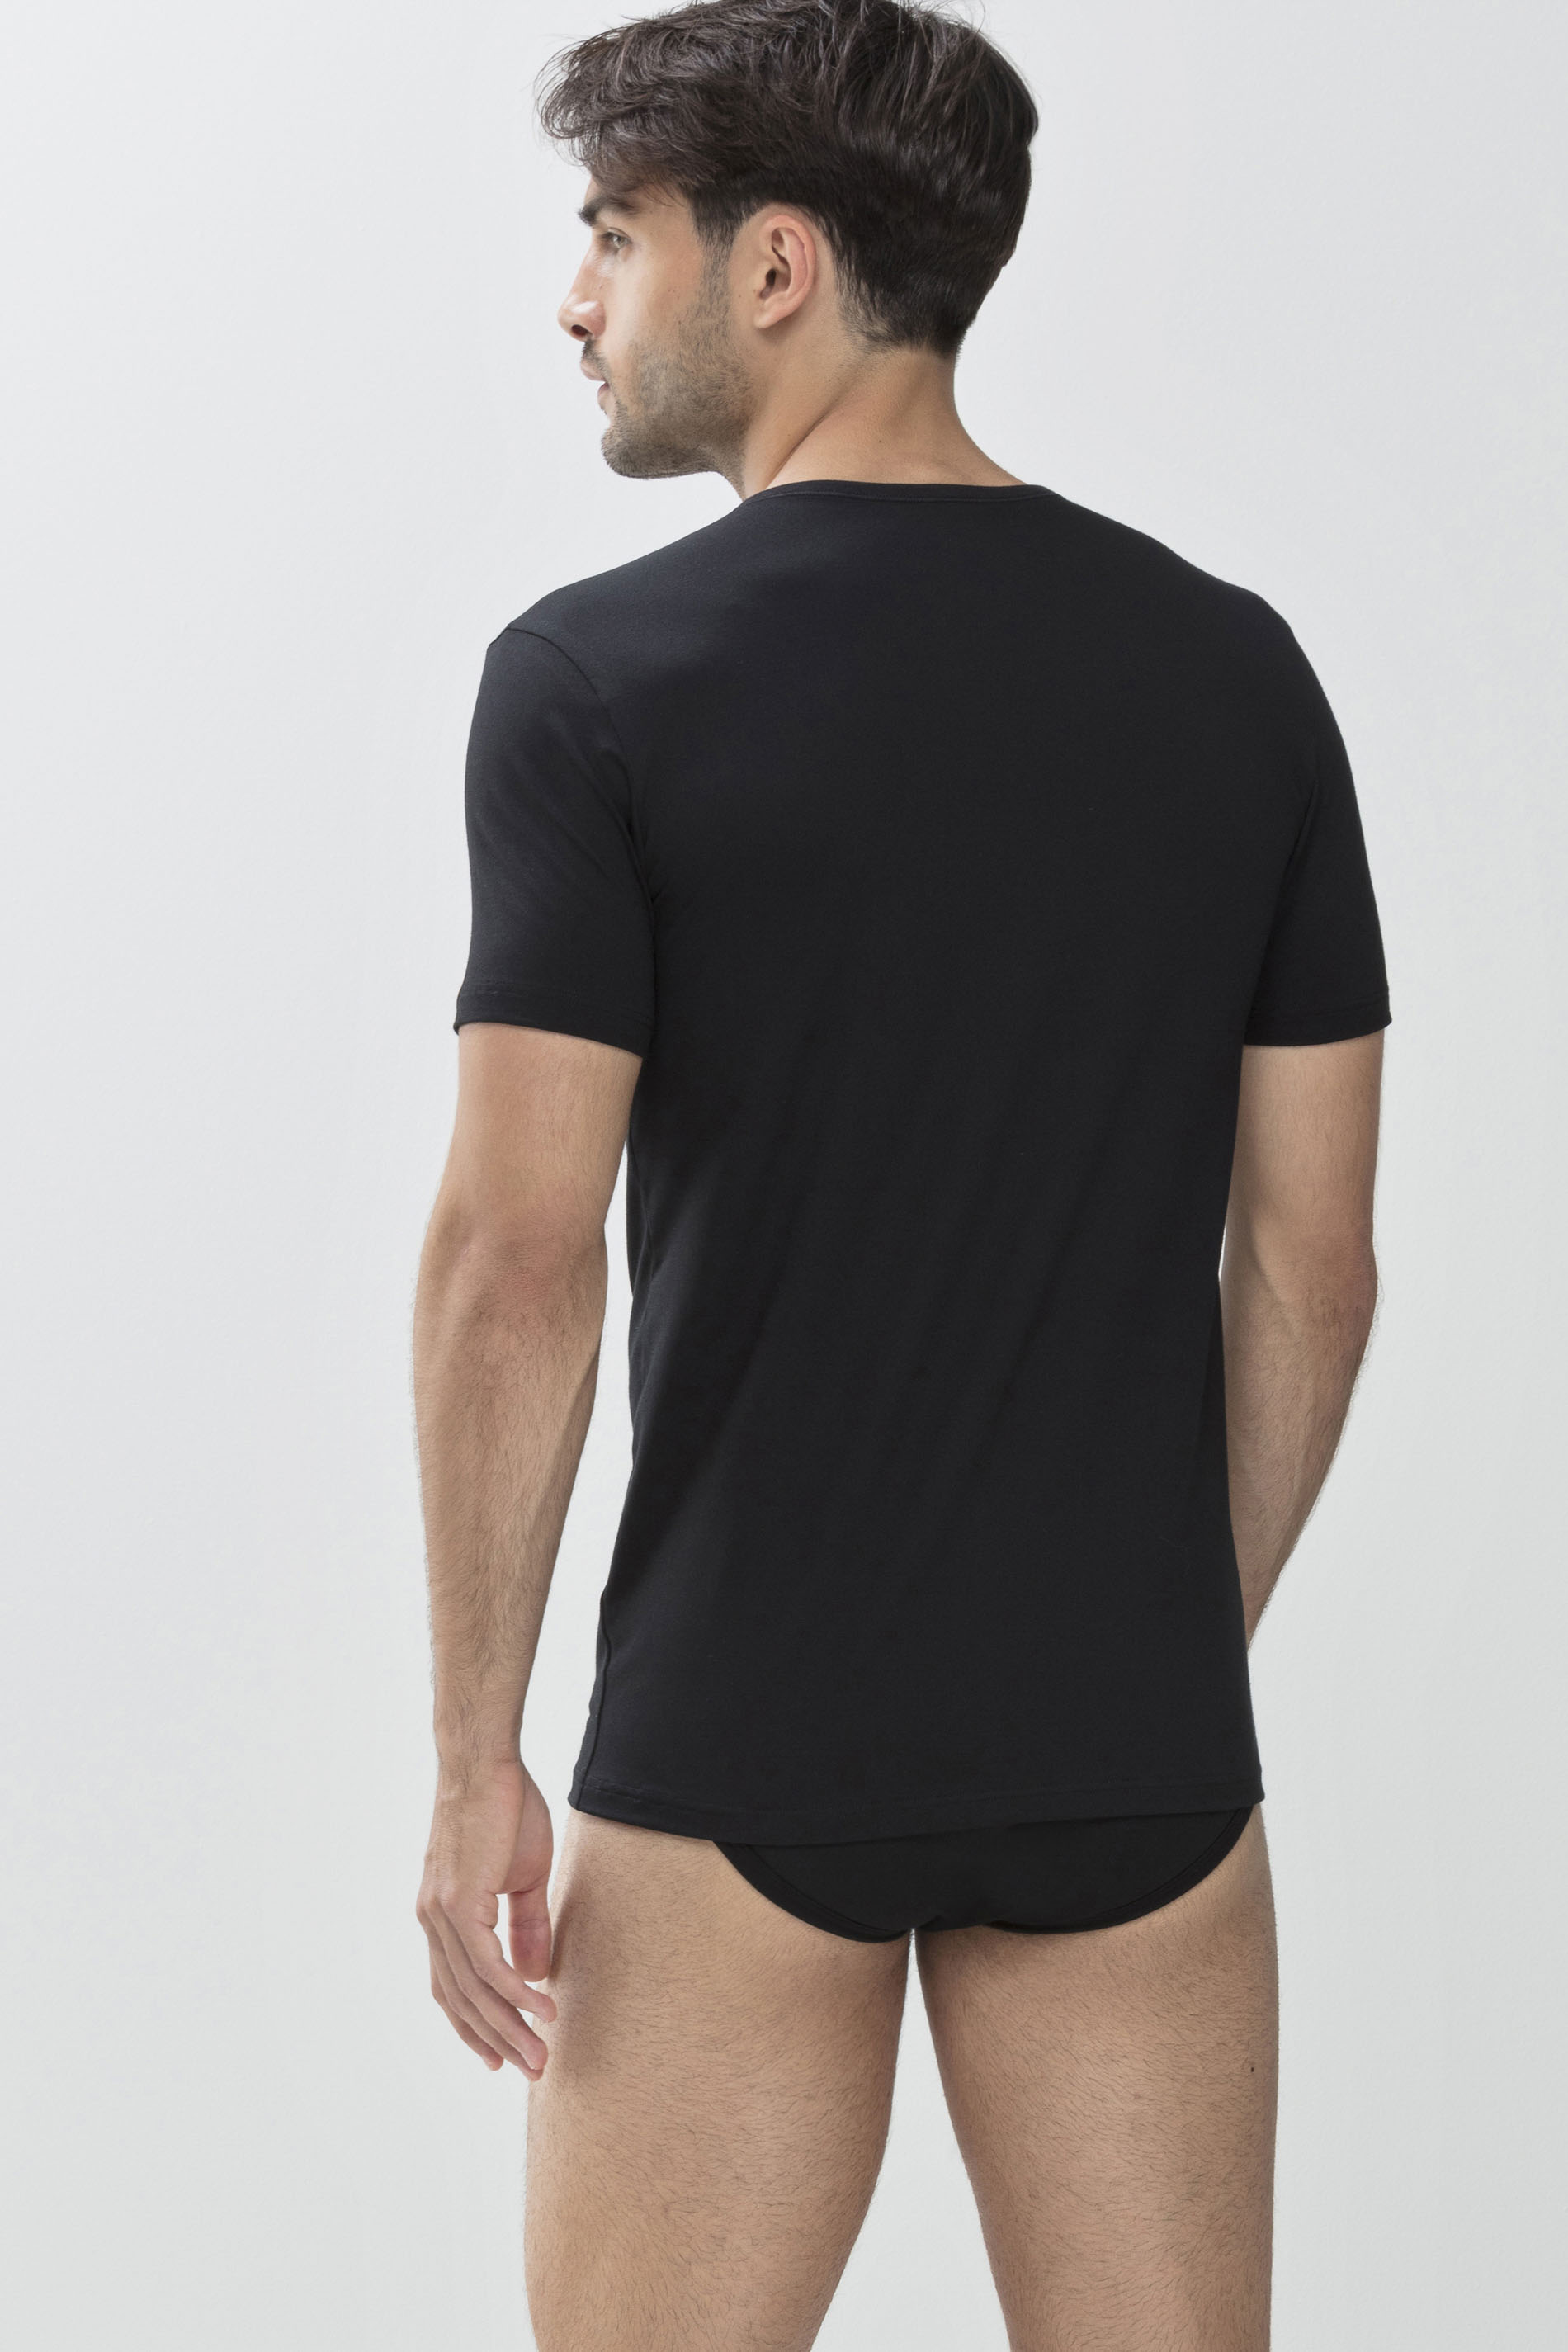 Shirt Black Serie Dry Cotton Rear View | mey®